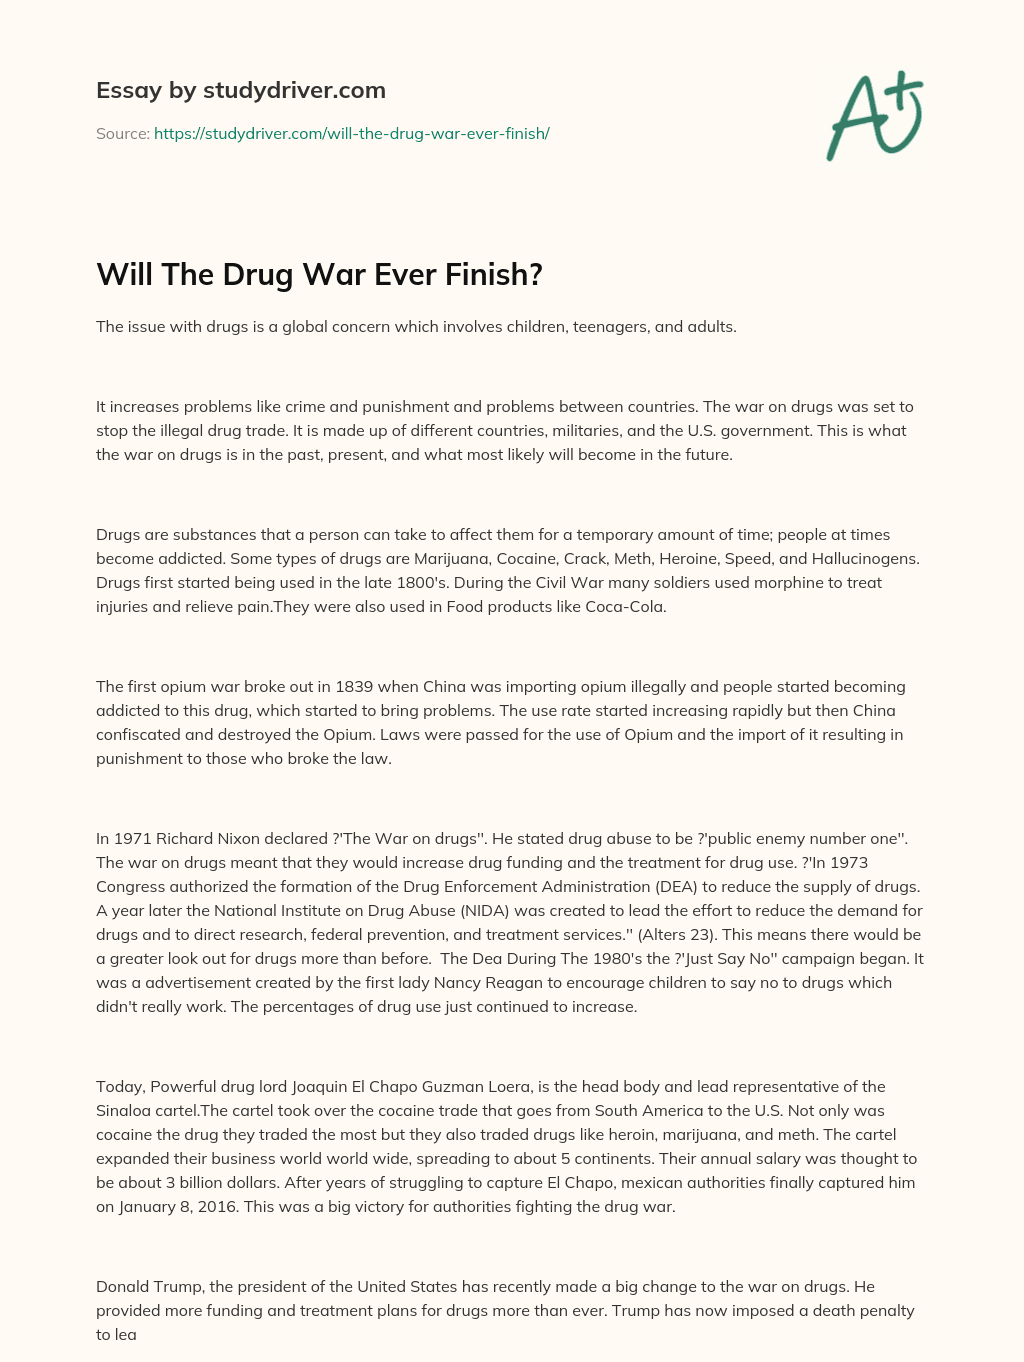 Will the Drug War Ever Finish? essay